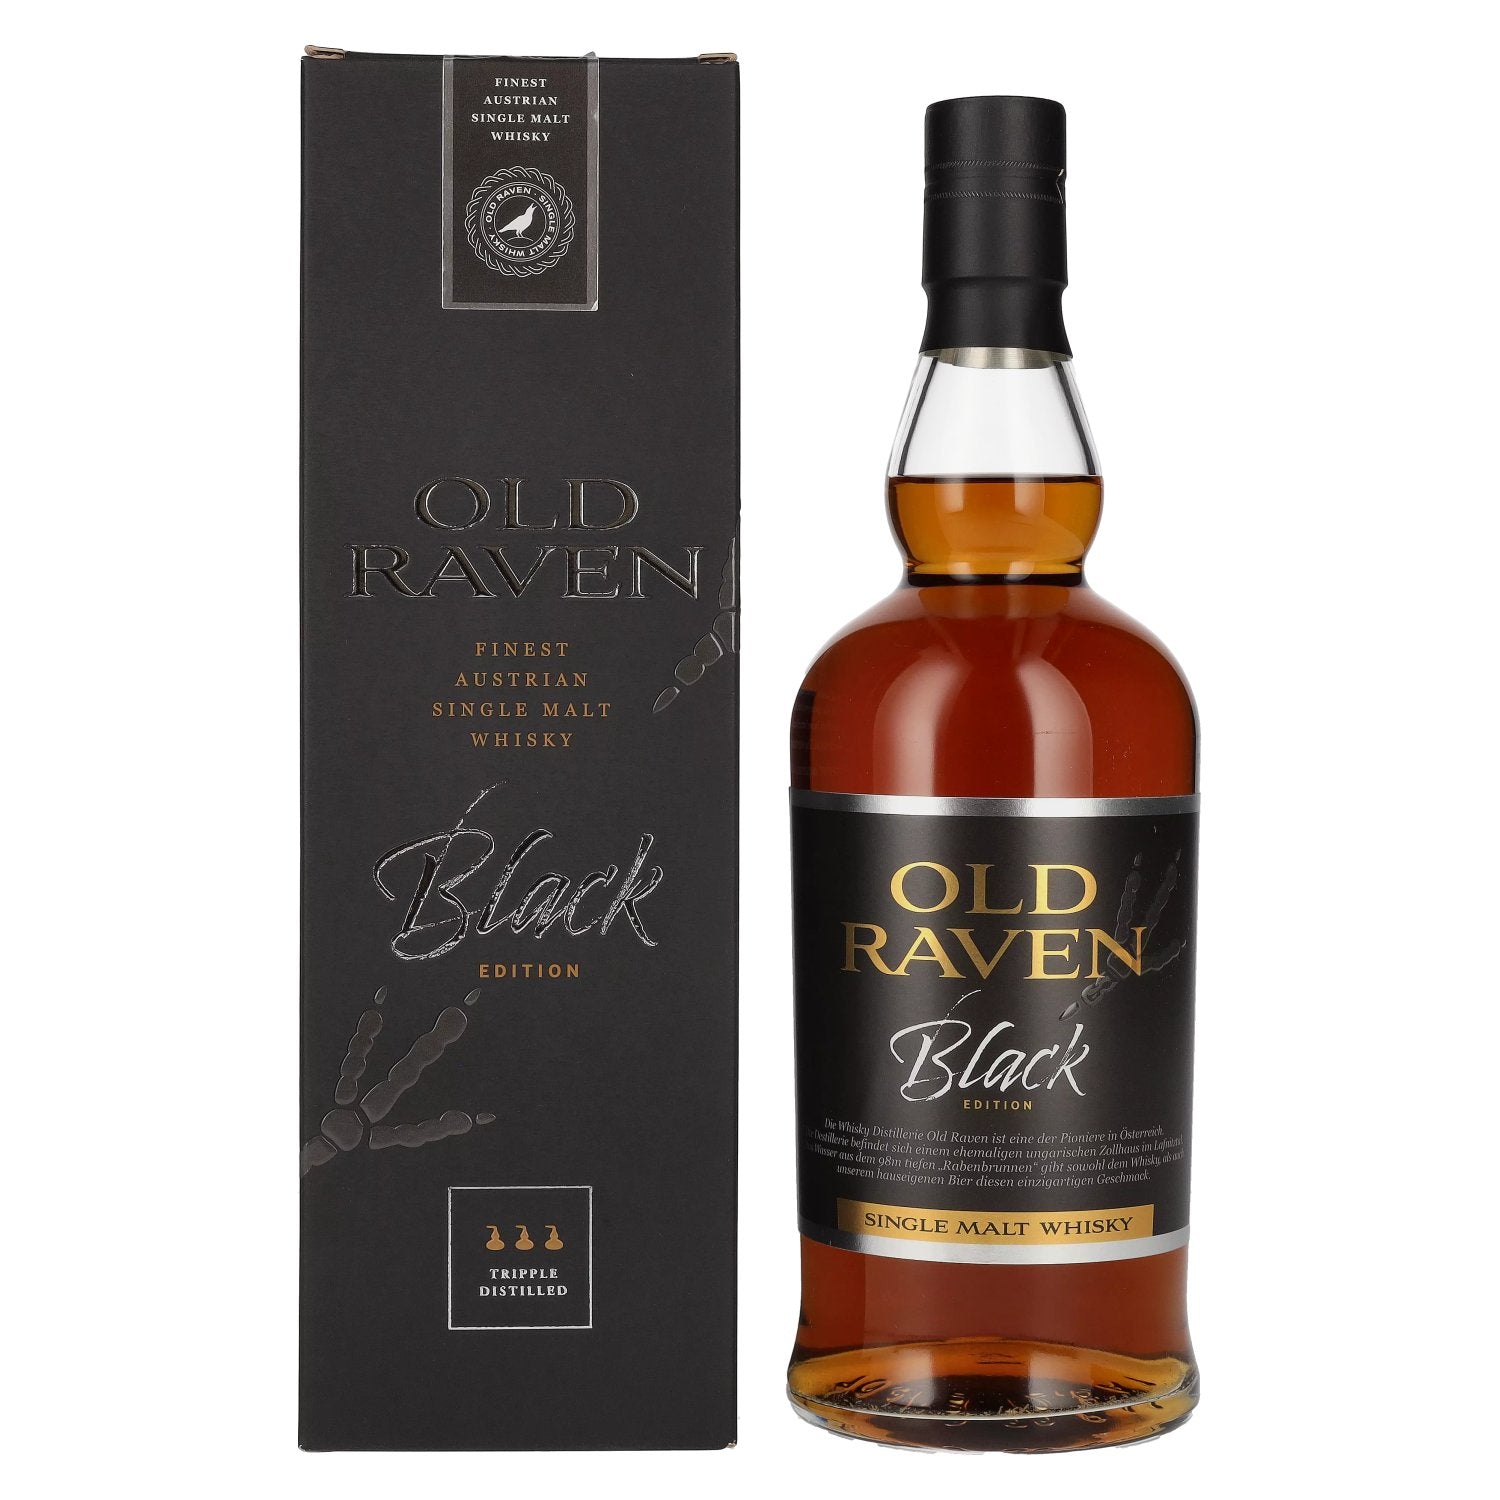 Old Raven Triple Distilled Single Malt Whisky Black Edition Fasstaerke Batch 1 55,2% Vol. 0,7l in Giftbox